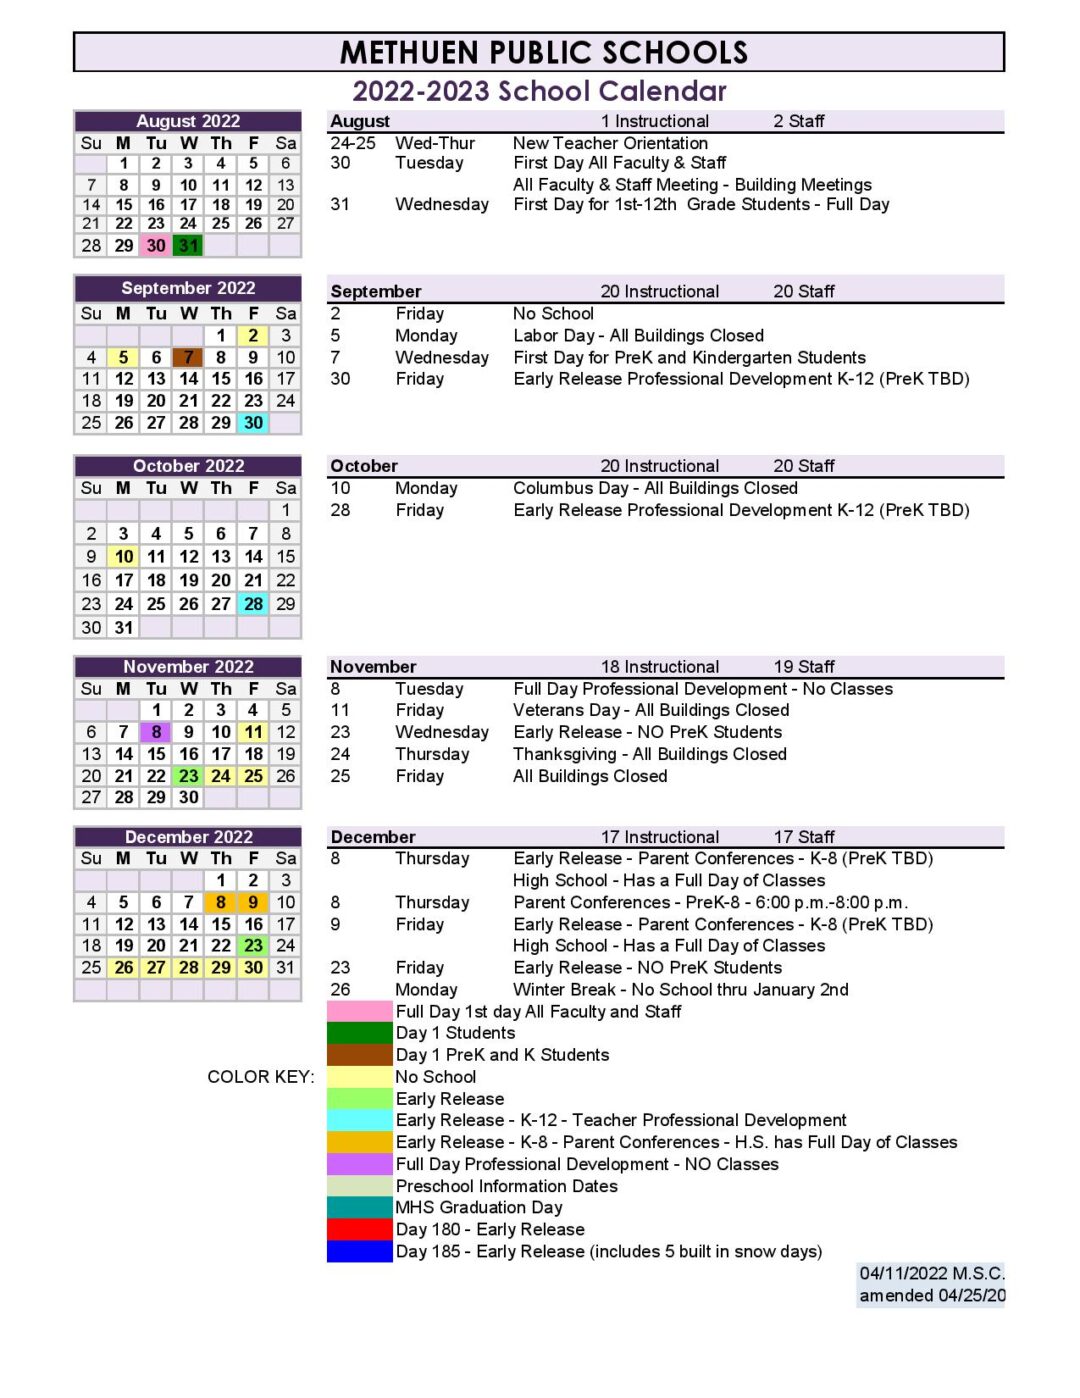 Methuen Public Schools Calendar 20222023 (Academic Session)